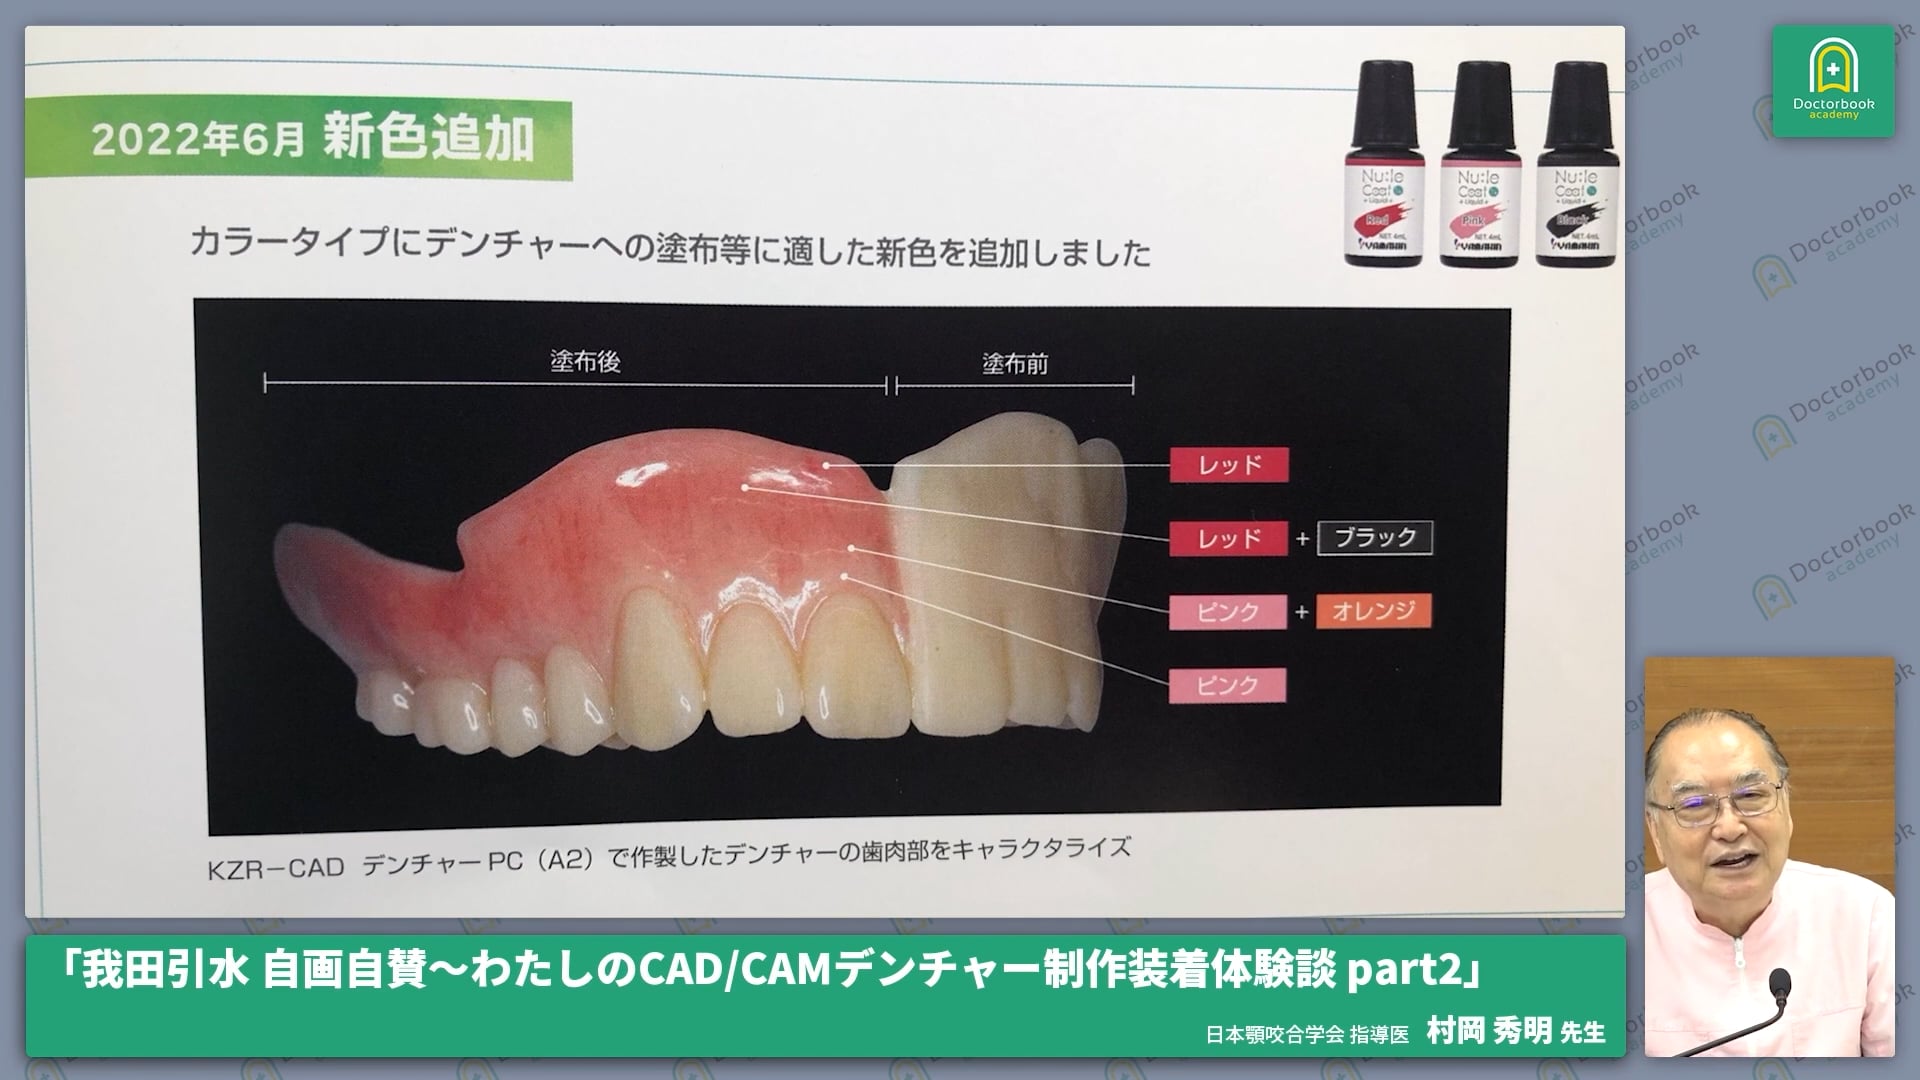 CAD/CAMデンチャー法と無歯顎の義歯作製